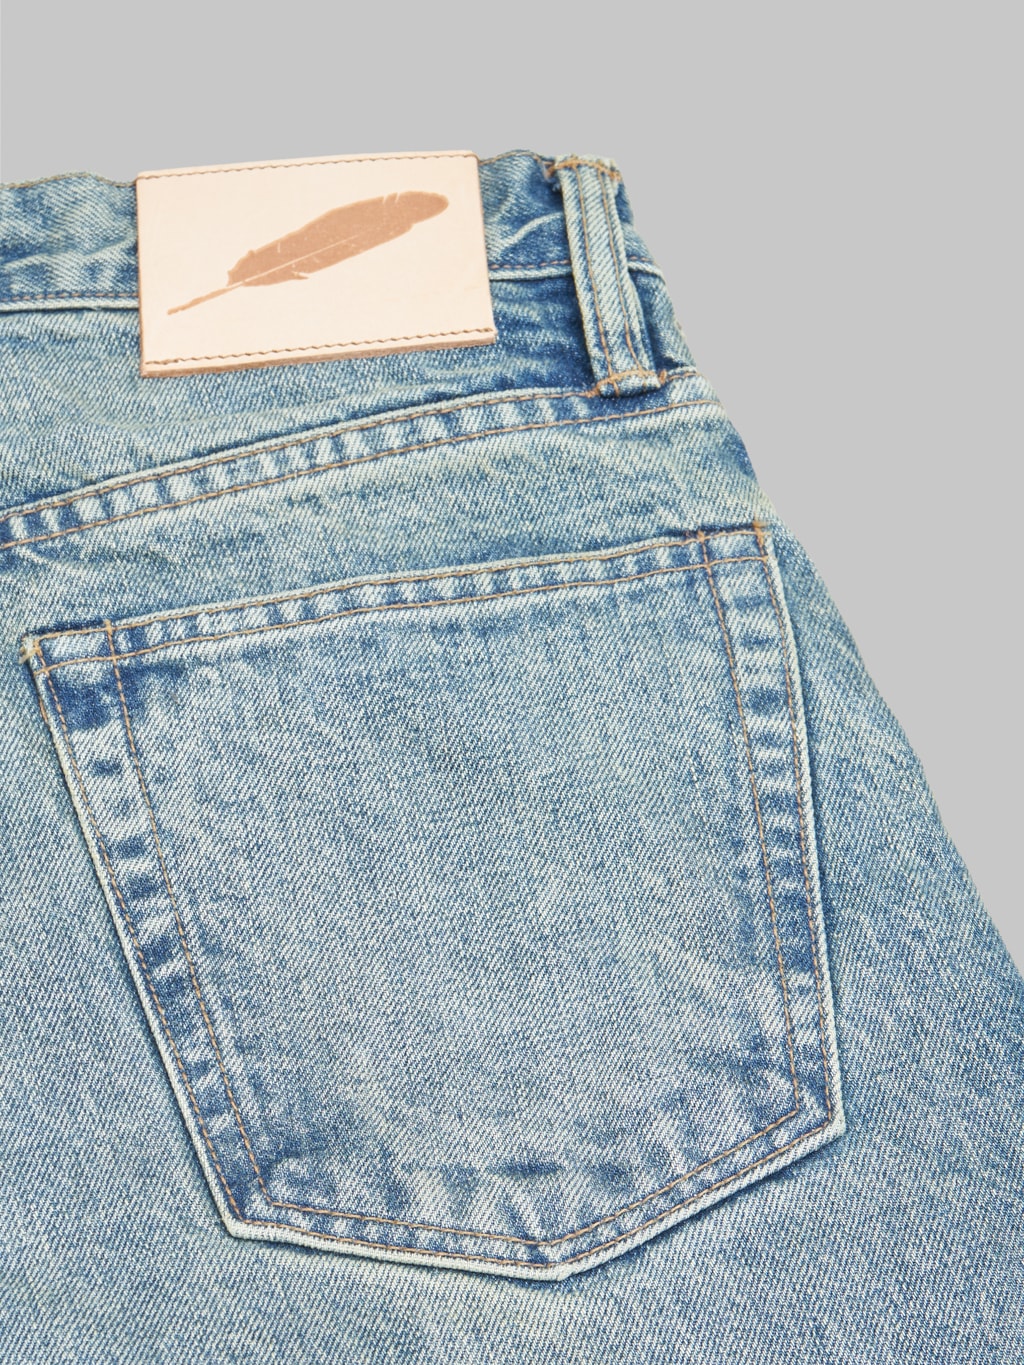 rogue territory strider light indigo wash selvedge jeans closeup